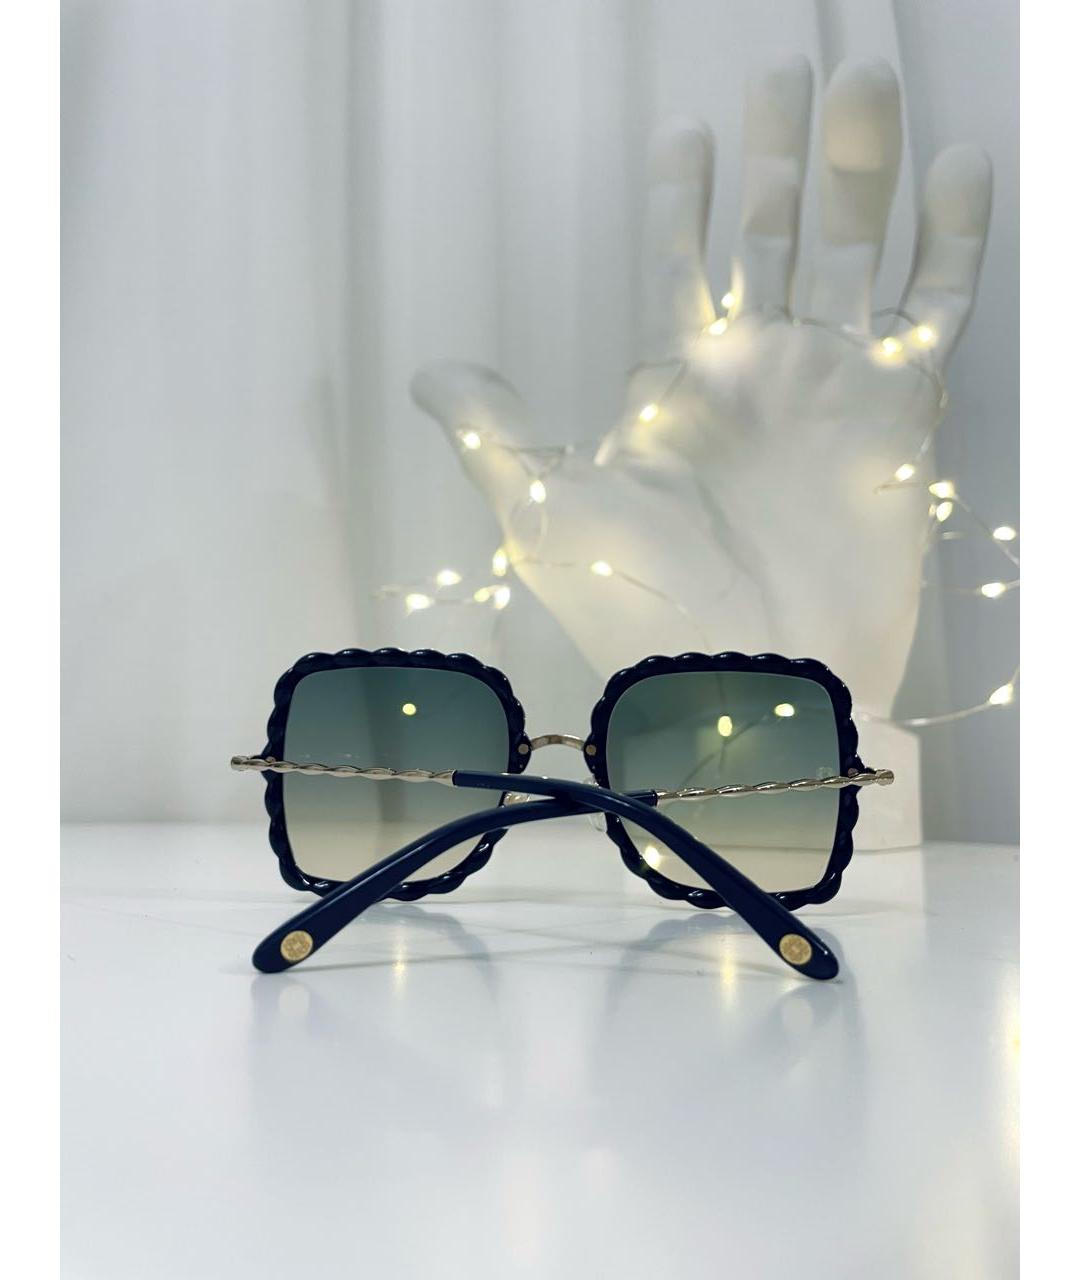 ELIE SAAB Темно-синие пластиковые солнцезащитные очки, фото 6